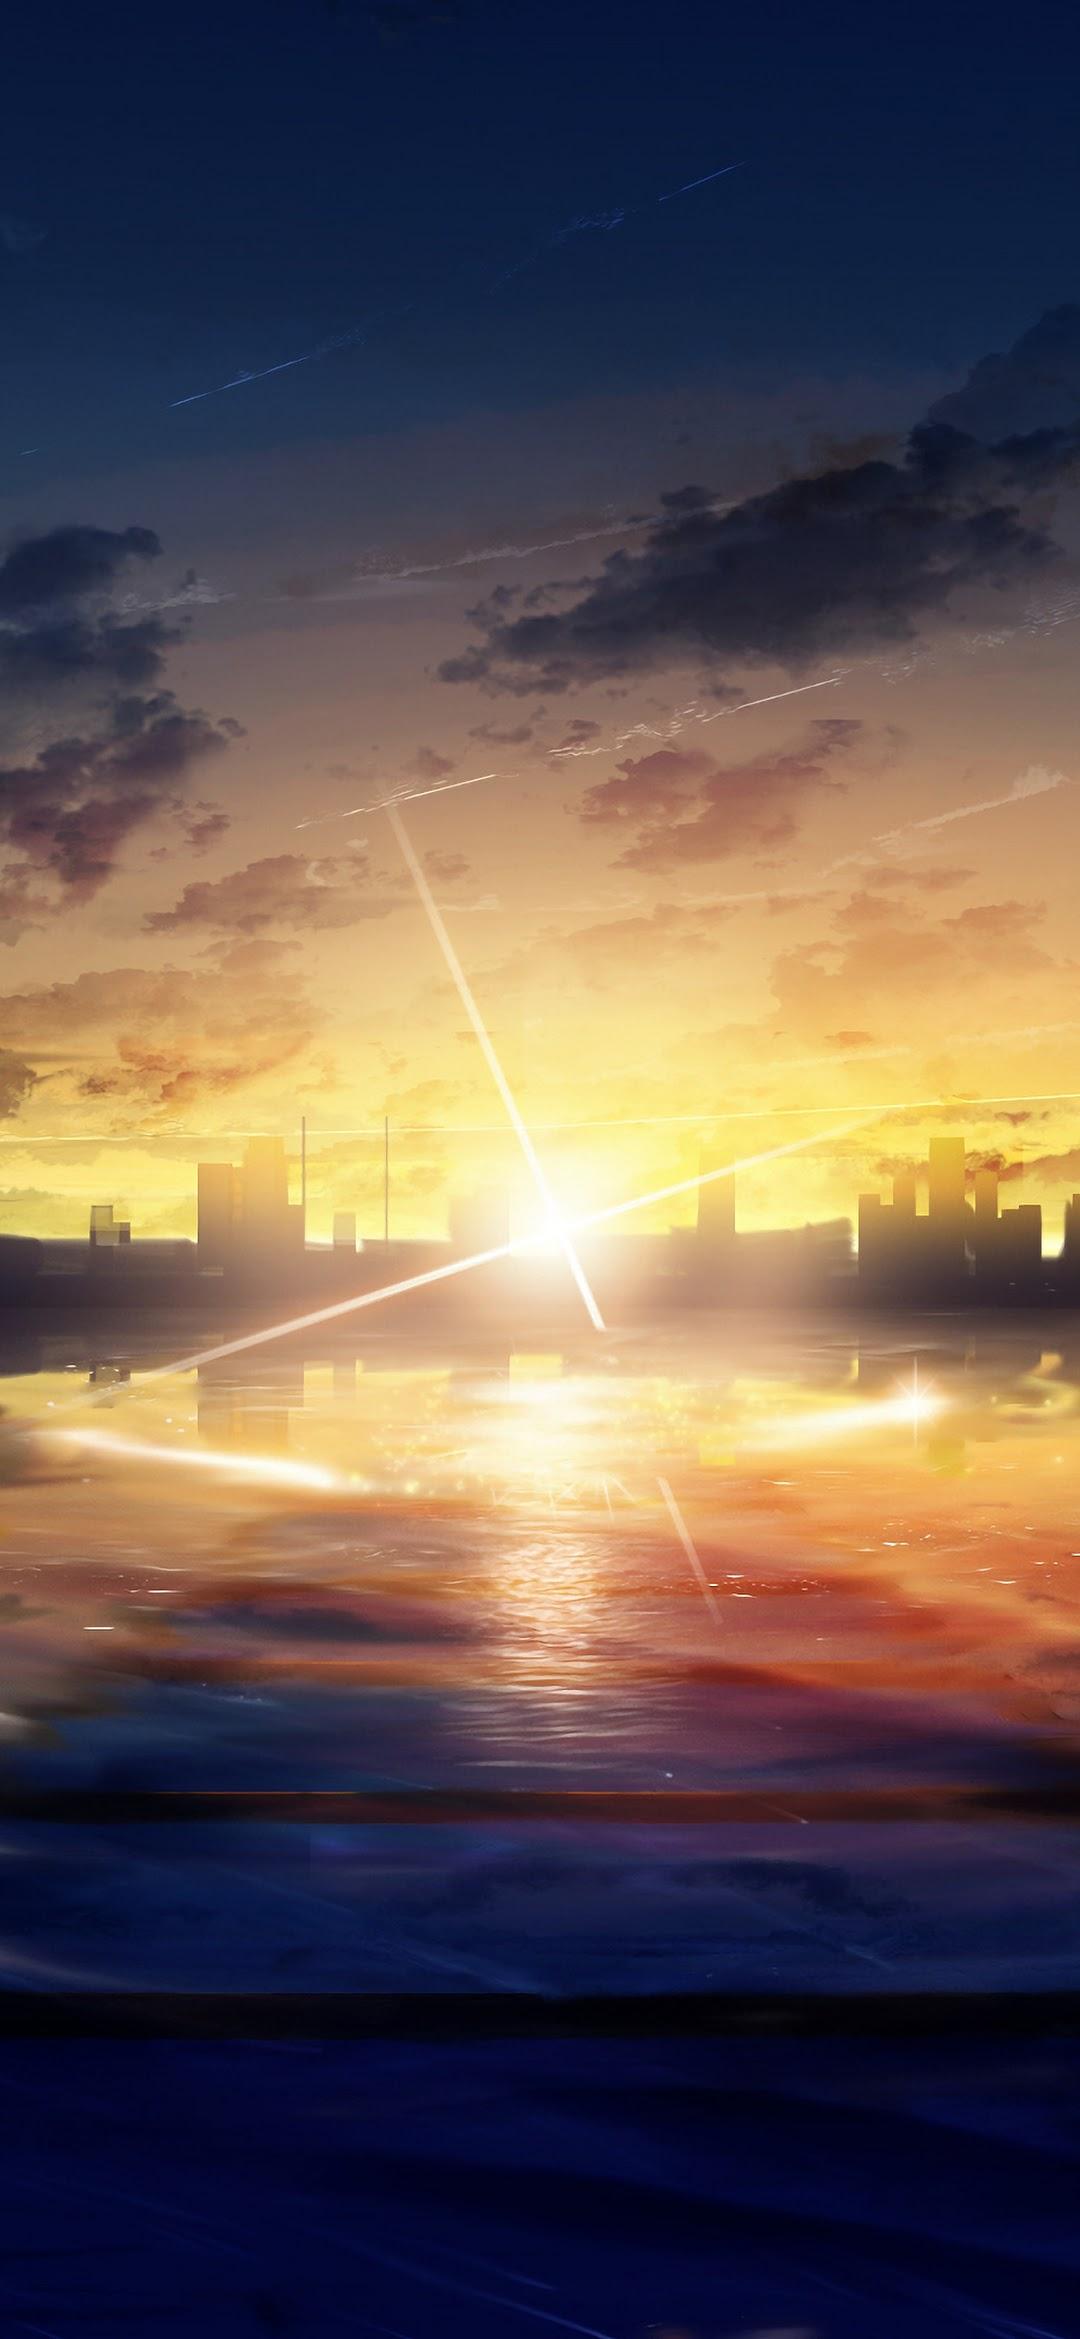 Sunrise Anime City Scenery Landscape 4k Wallpaper